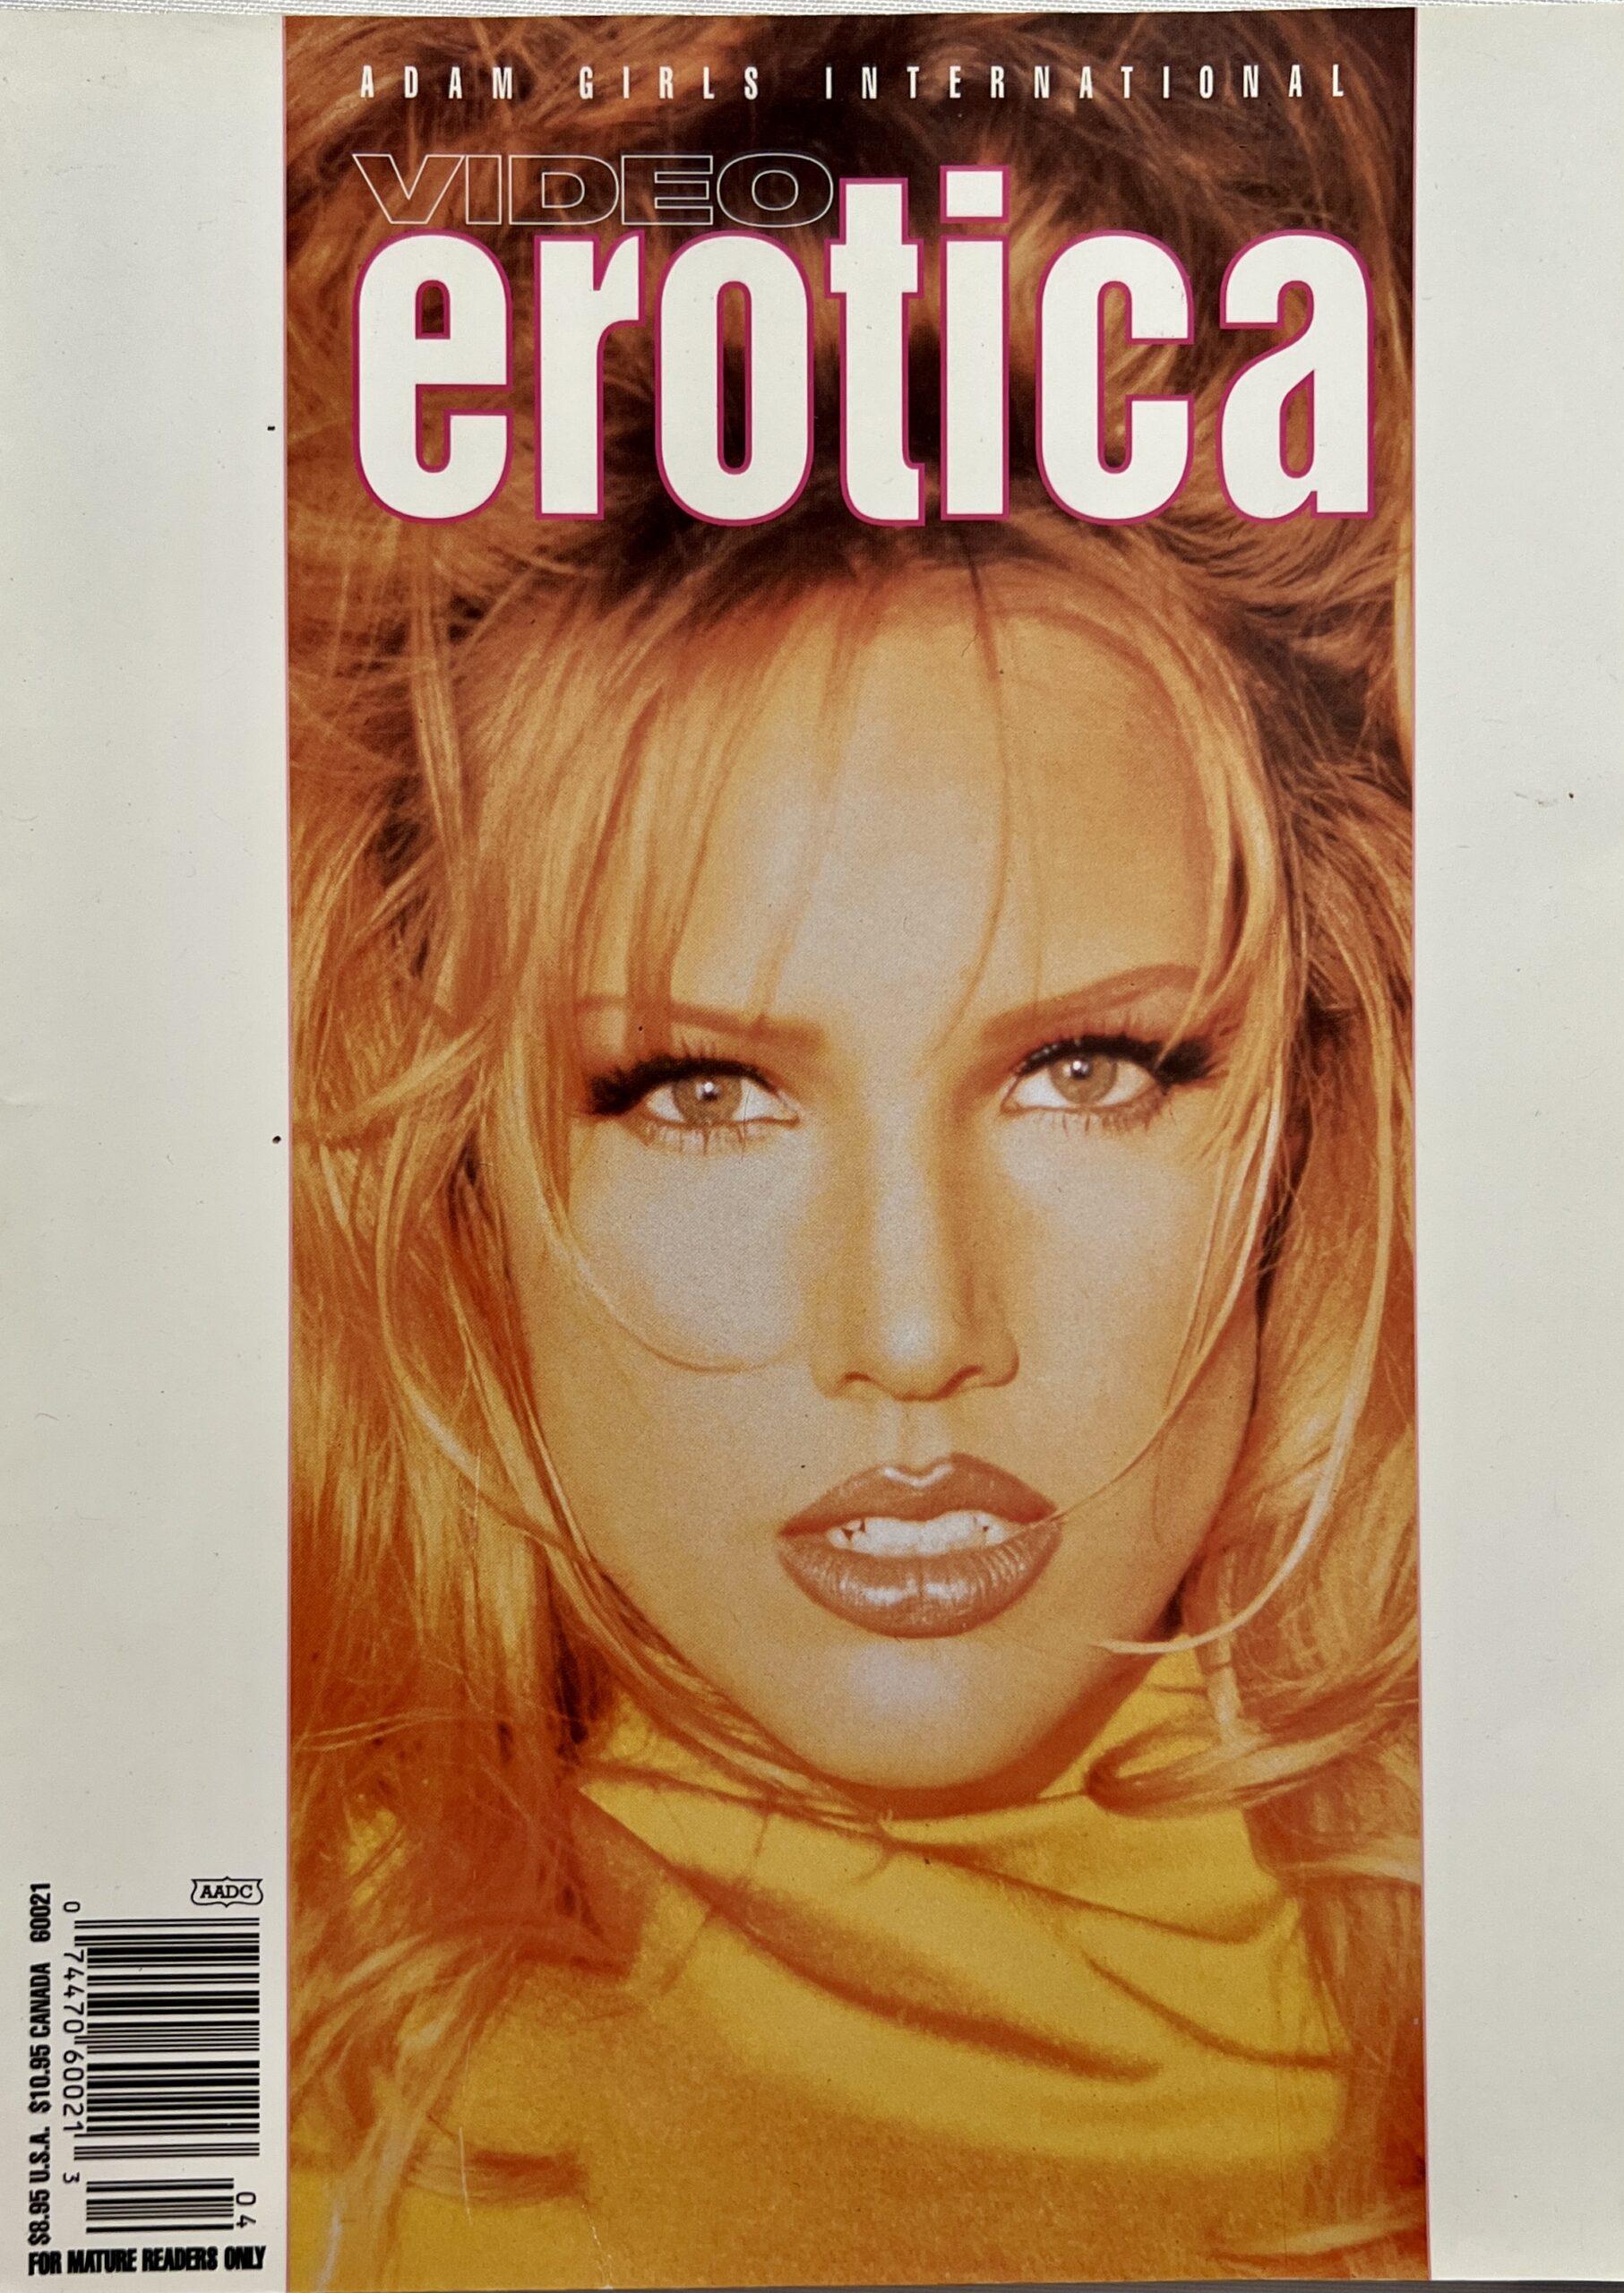 Adam Girls International Video Erotica July 1996 Vm16